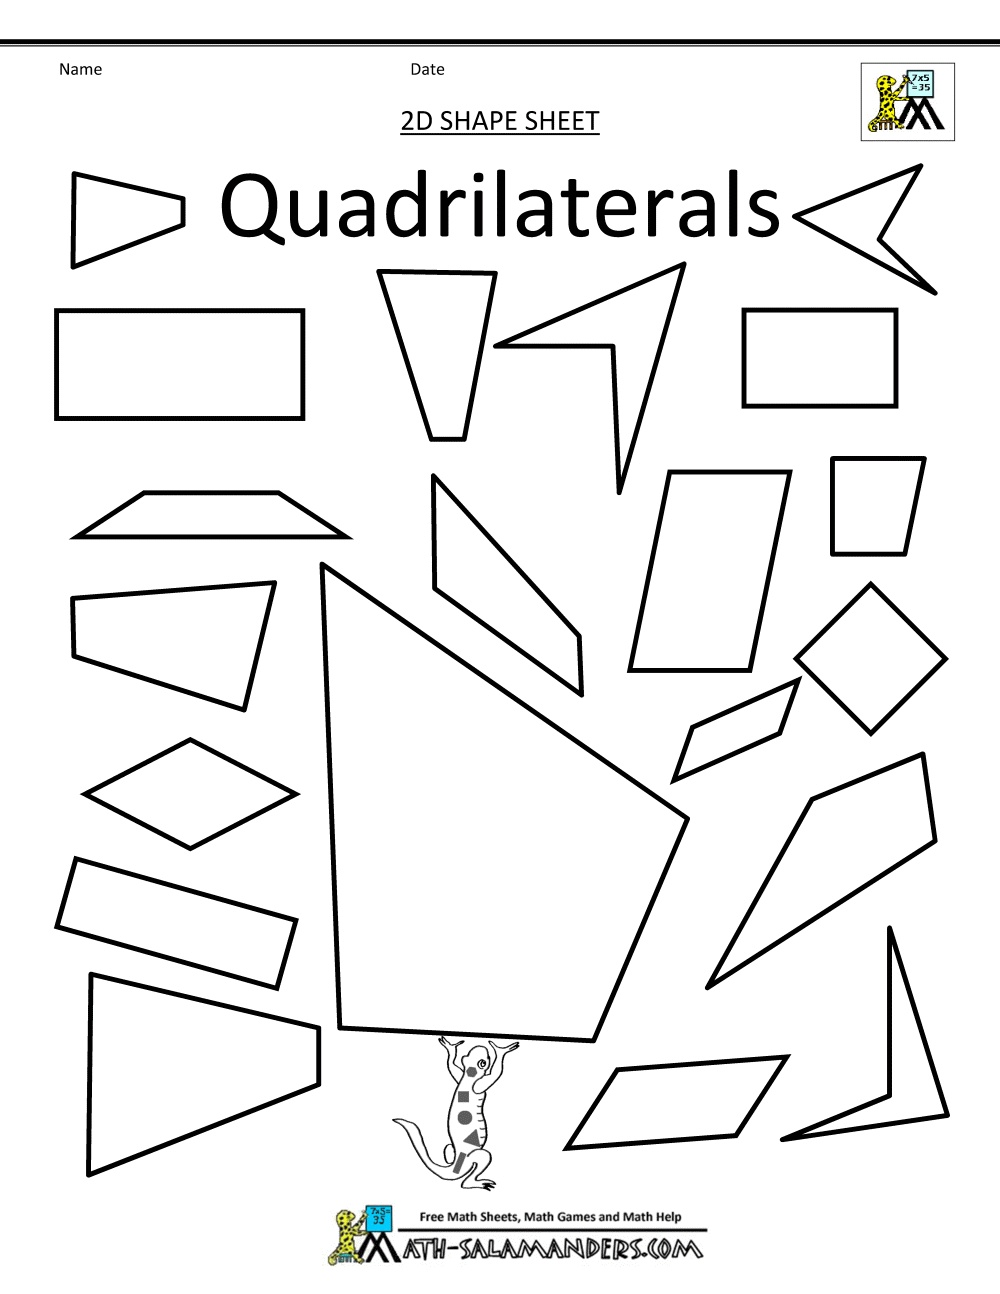 quadrilaterals clipart - photo #3